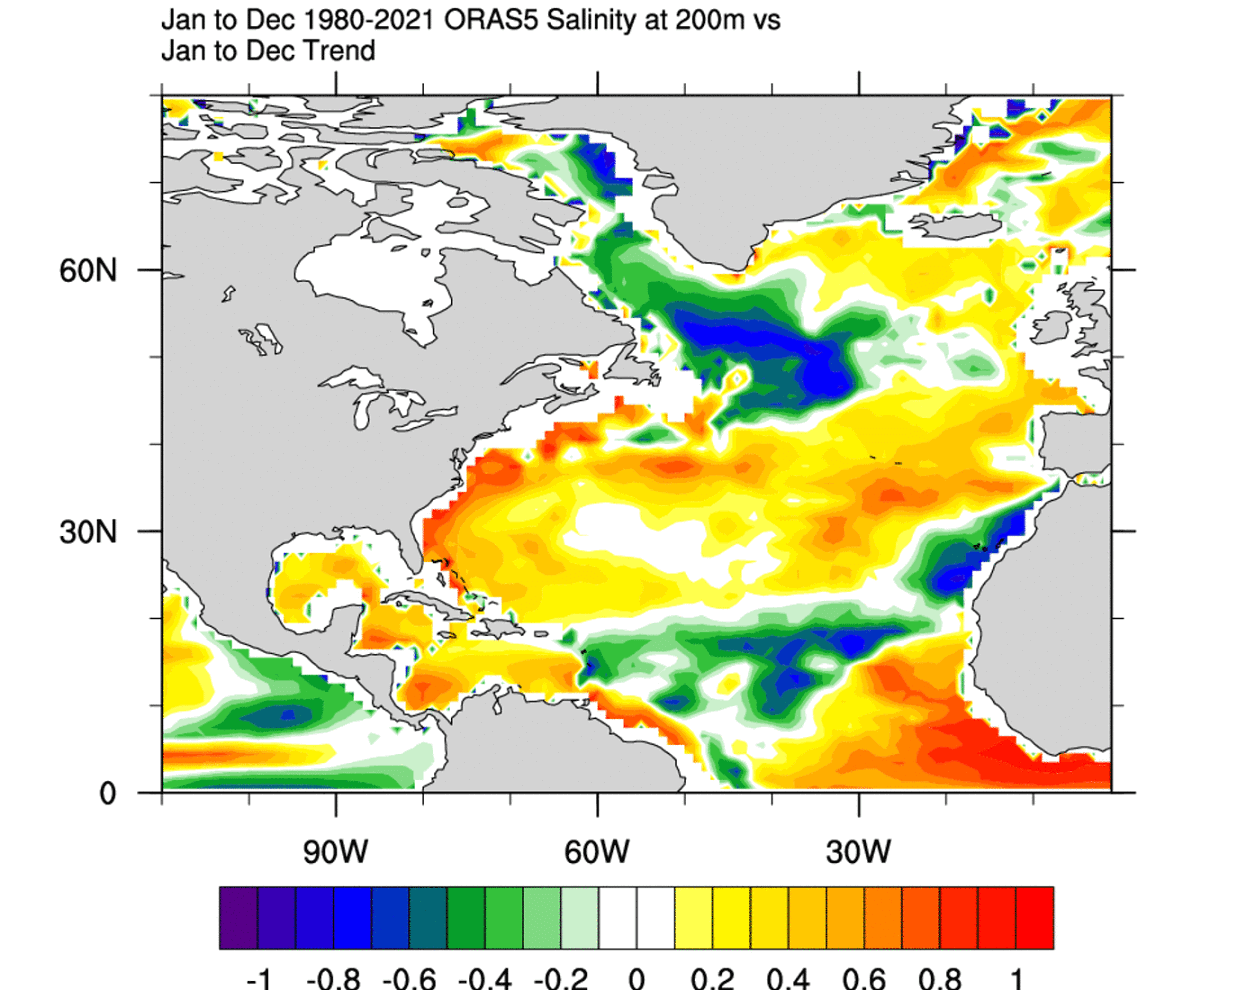 gulf-stream-collapse-signal-north-atlantic-ocean-salinity-fresh-water-melting-ice-200-meter-long-term-trend-ecmwf